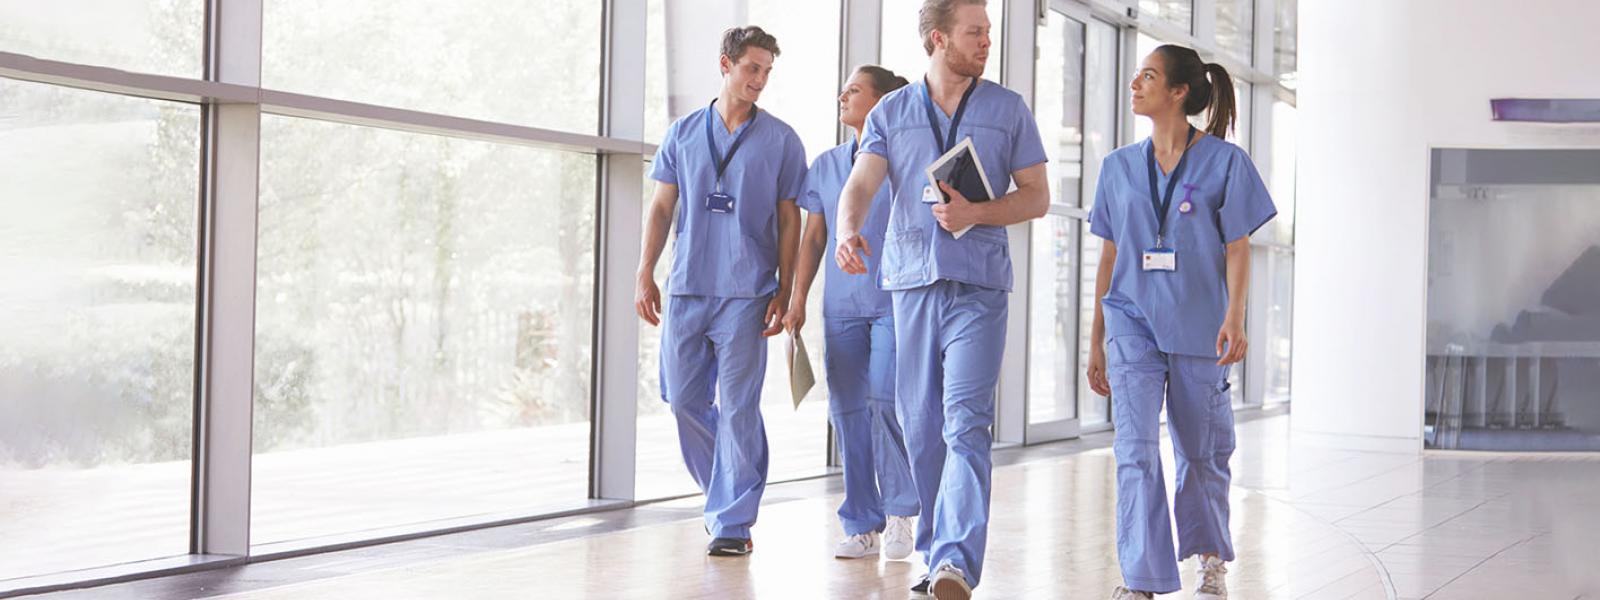 healthcare workers walking through hallway